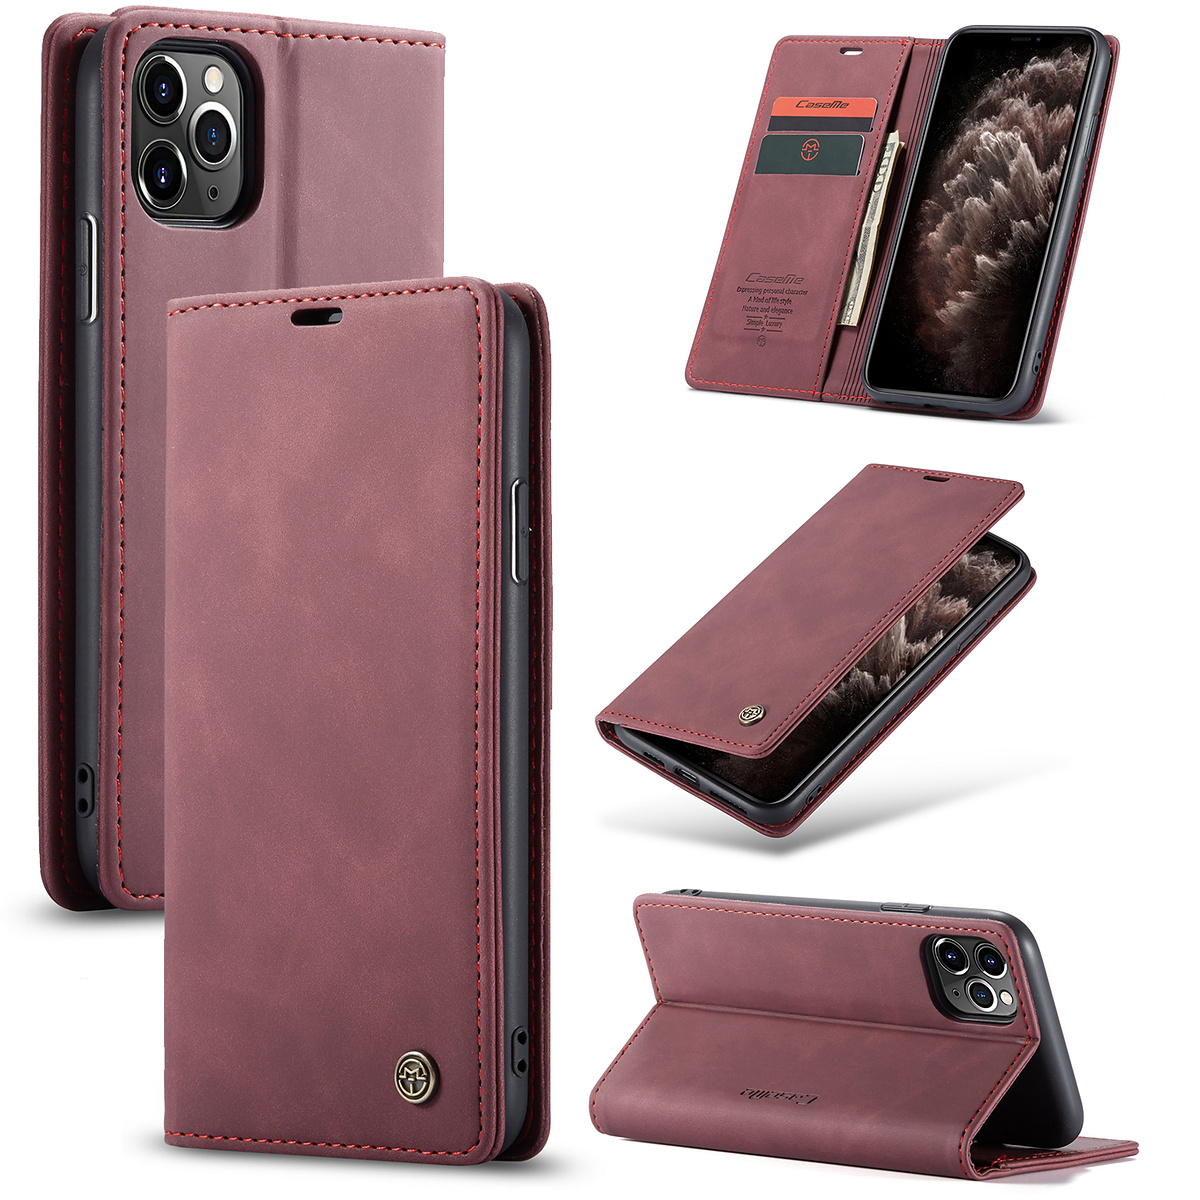 CaseMe plånboksfodral till iPhone 11 Pro, vinröd